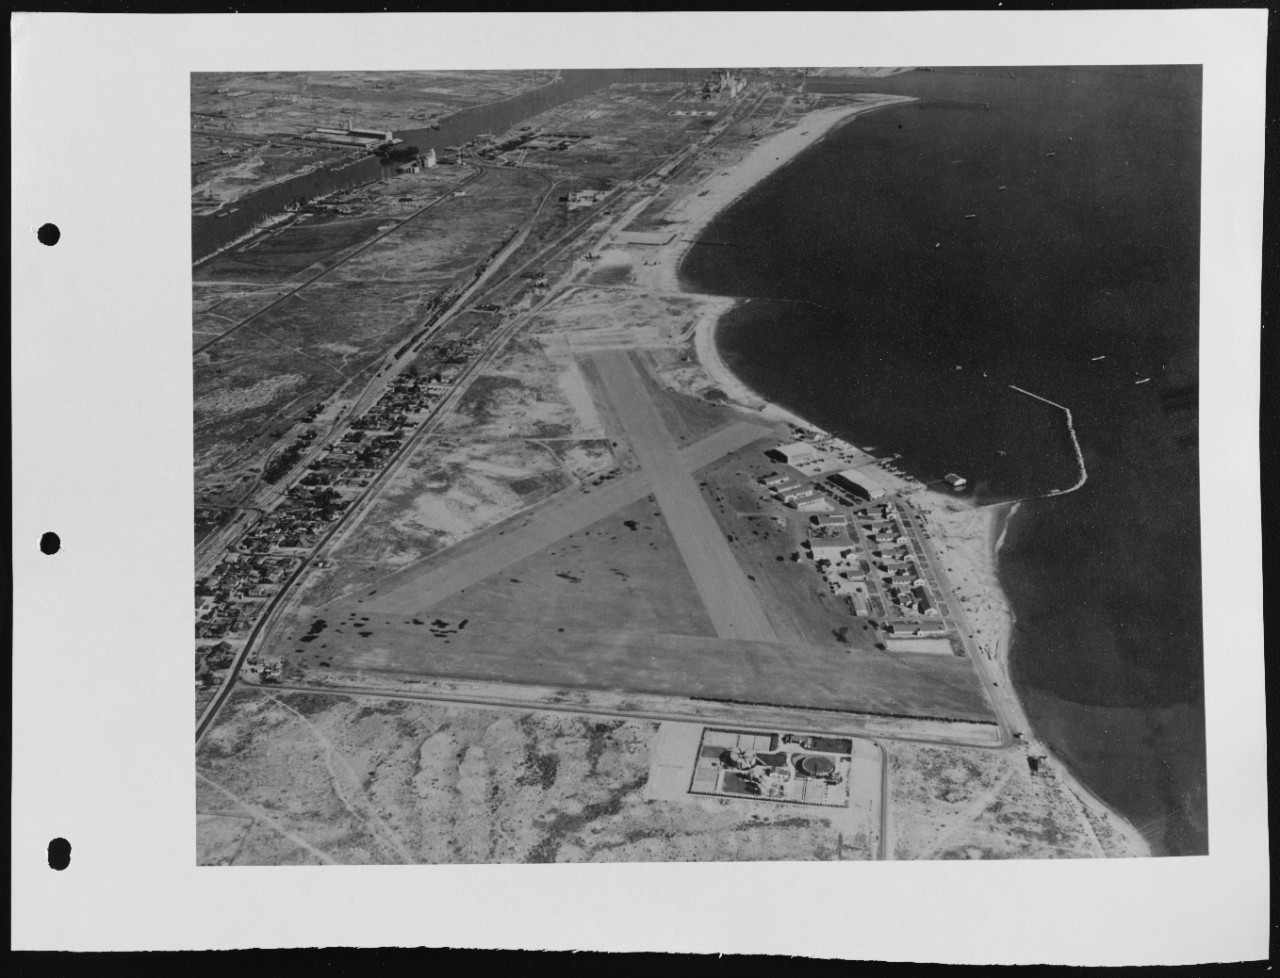 Reeves Field, U.S. Naval Air Station San Diego, California